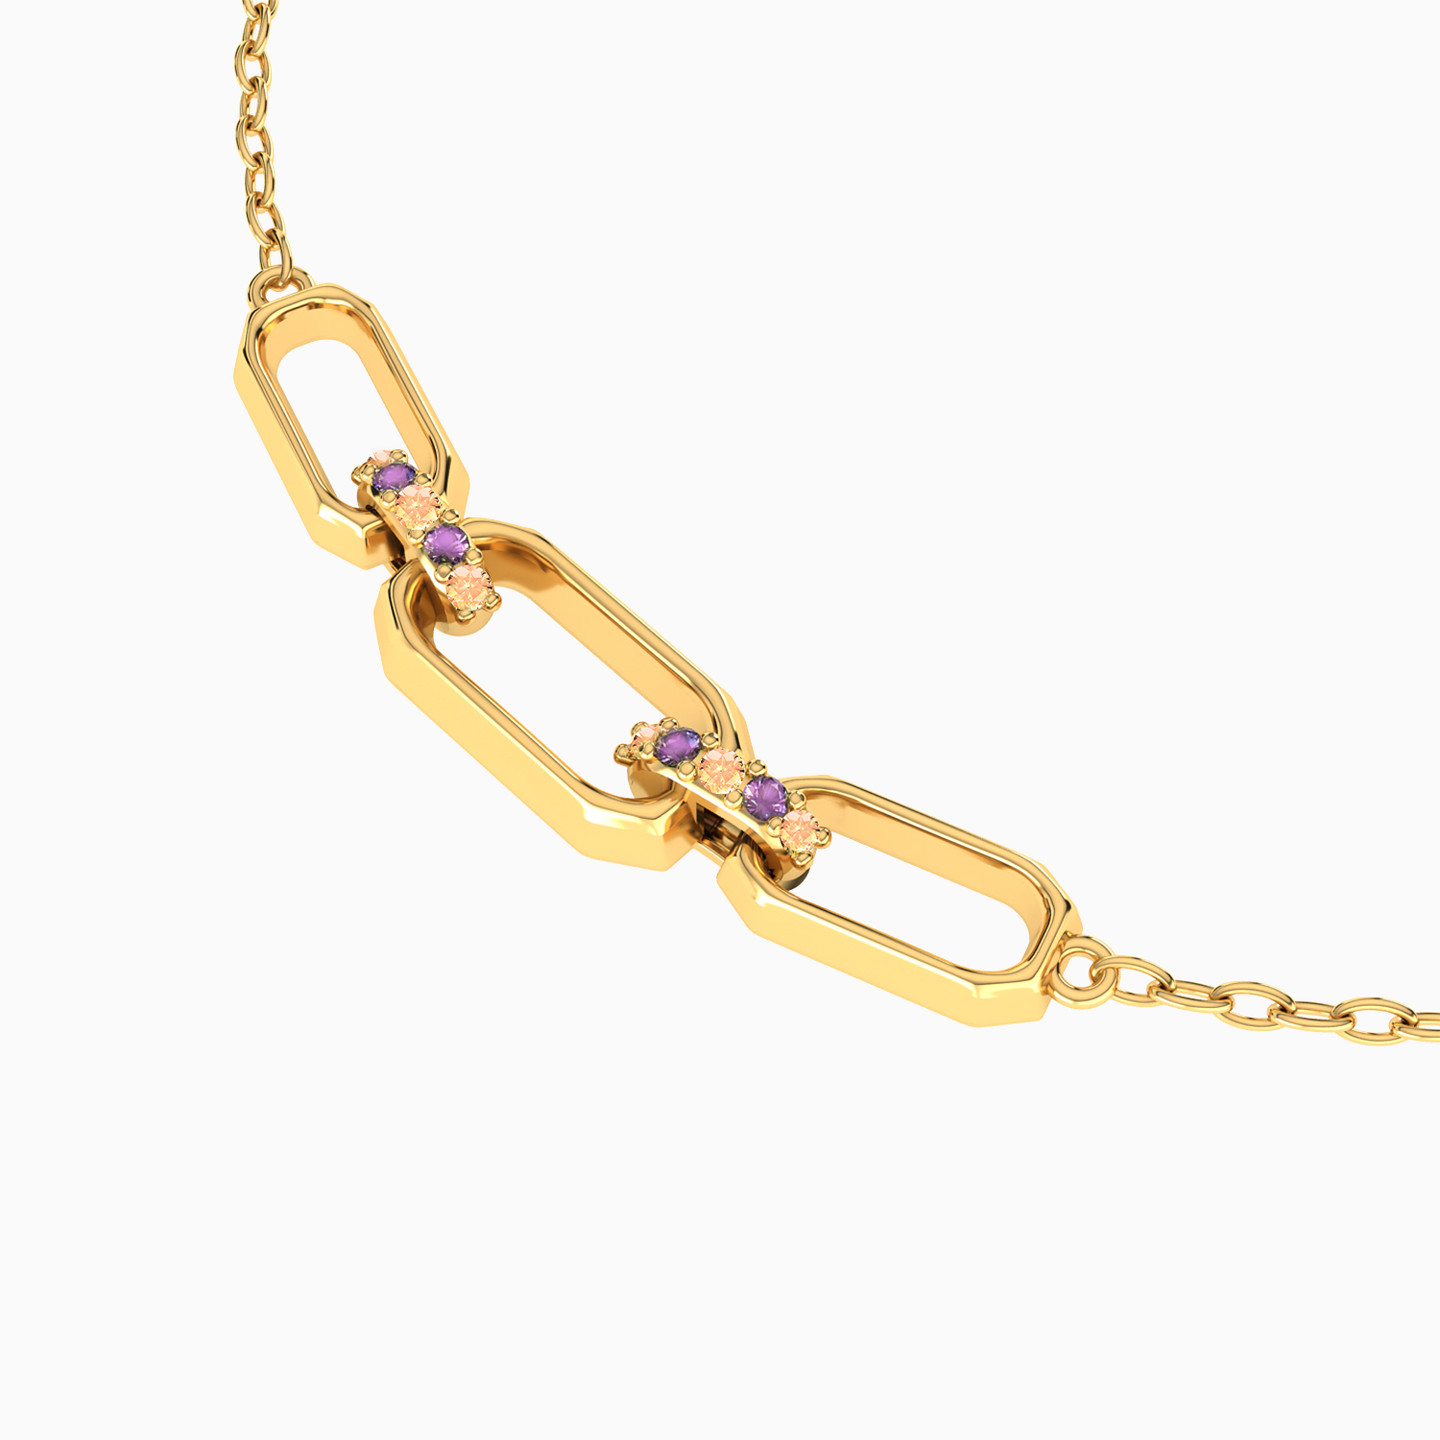 14K Gold Colored Stones Chain Bracelet - 3